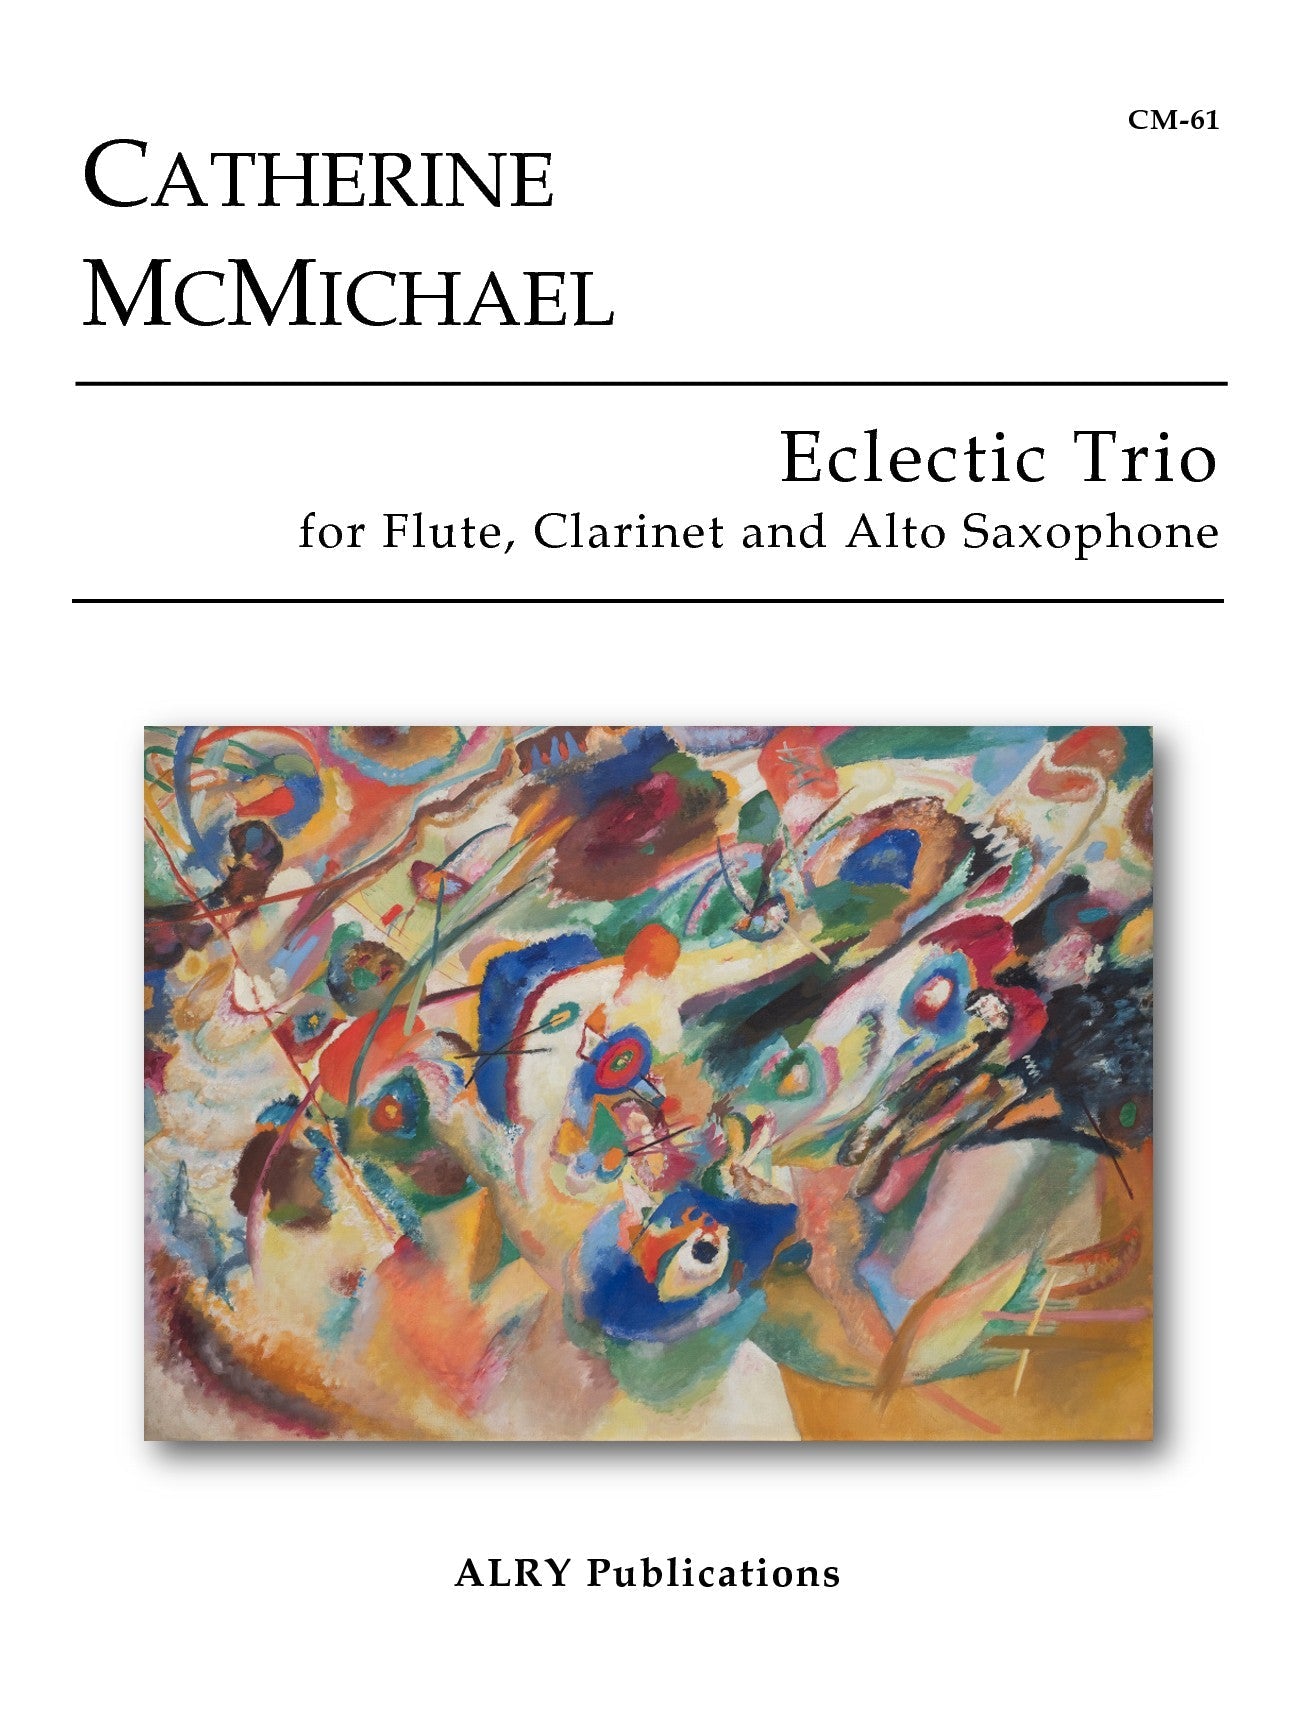 McMichael - Eclectic Trio